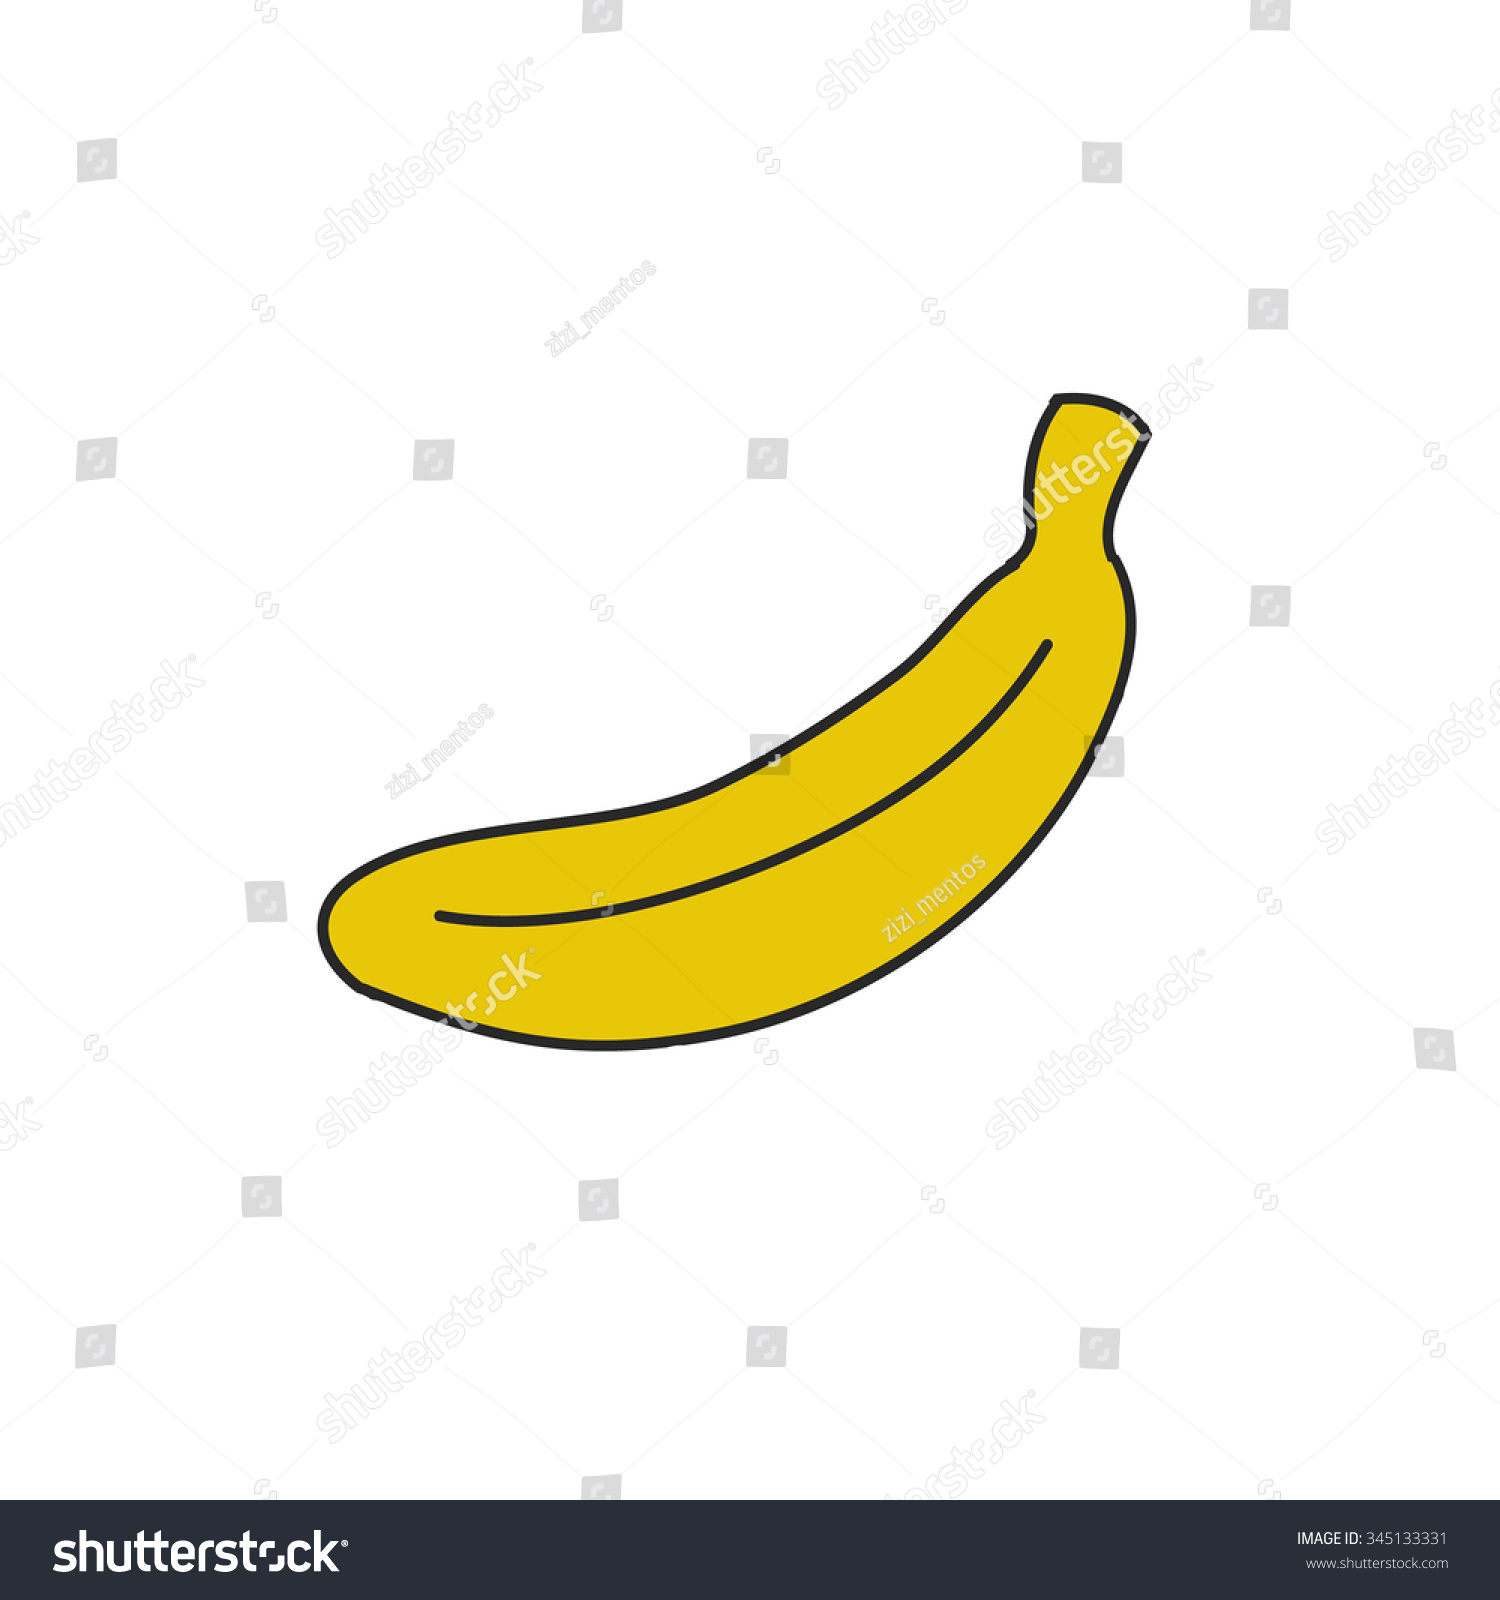 Doodle Icon Banana Vector Illustration Stock Vector Royalty Free Shutterstock